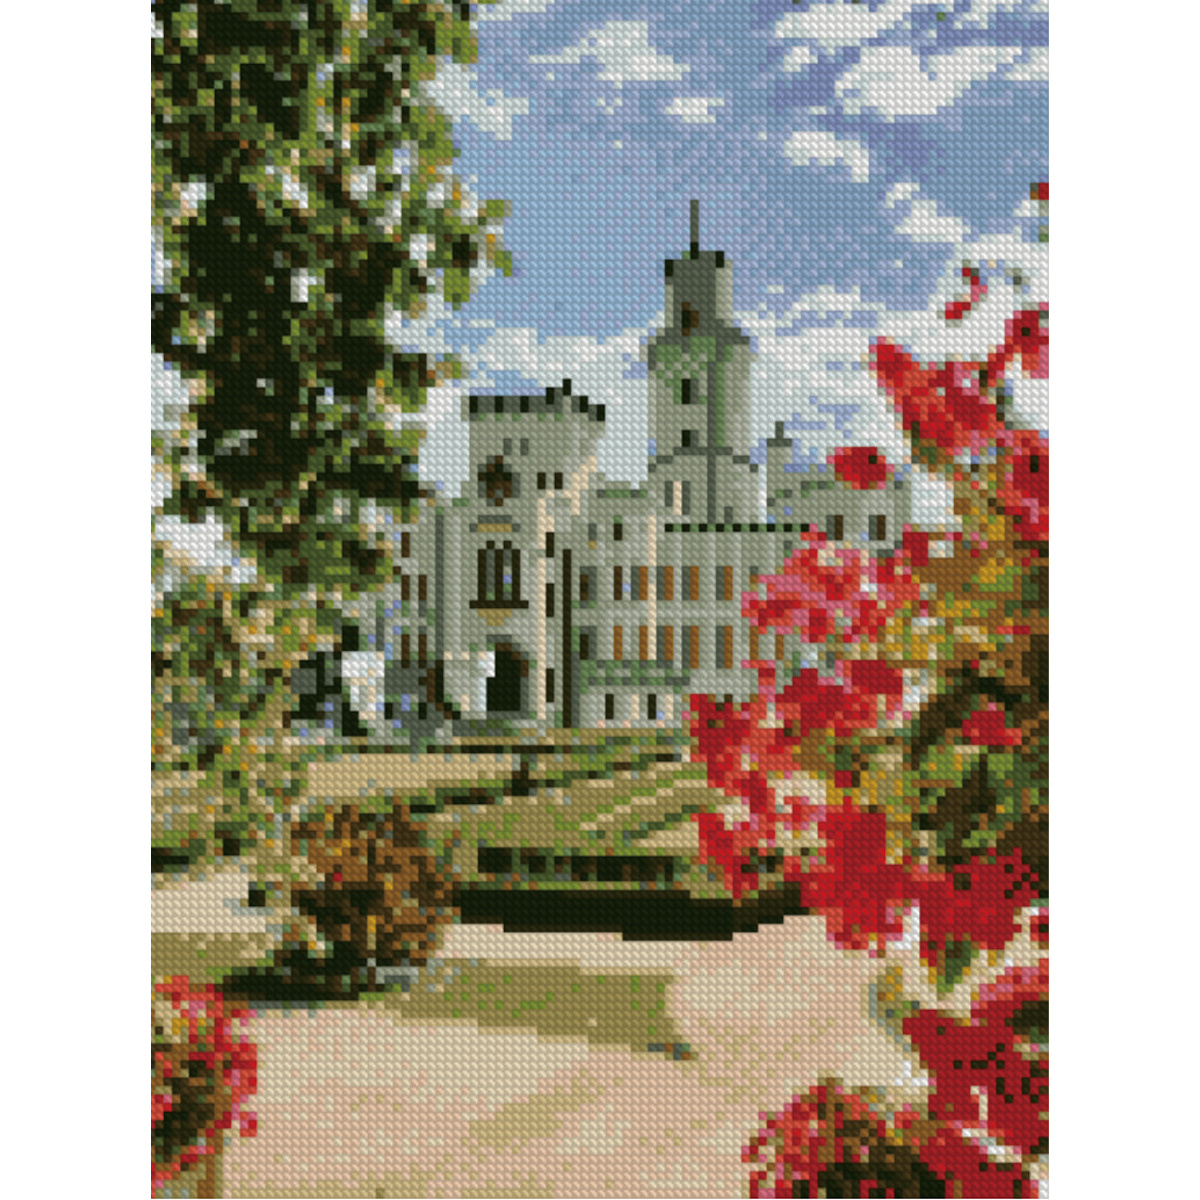 Diamond mosaic Premium HX288 "View of the estate", size 30x40 cm